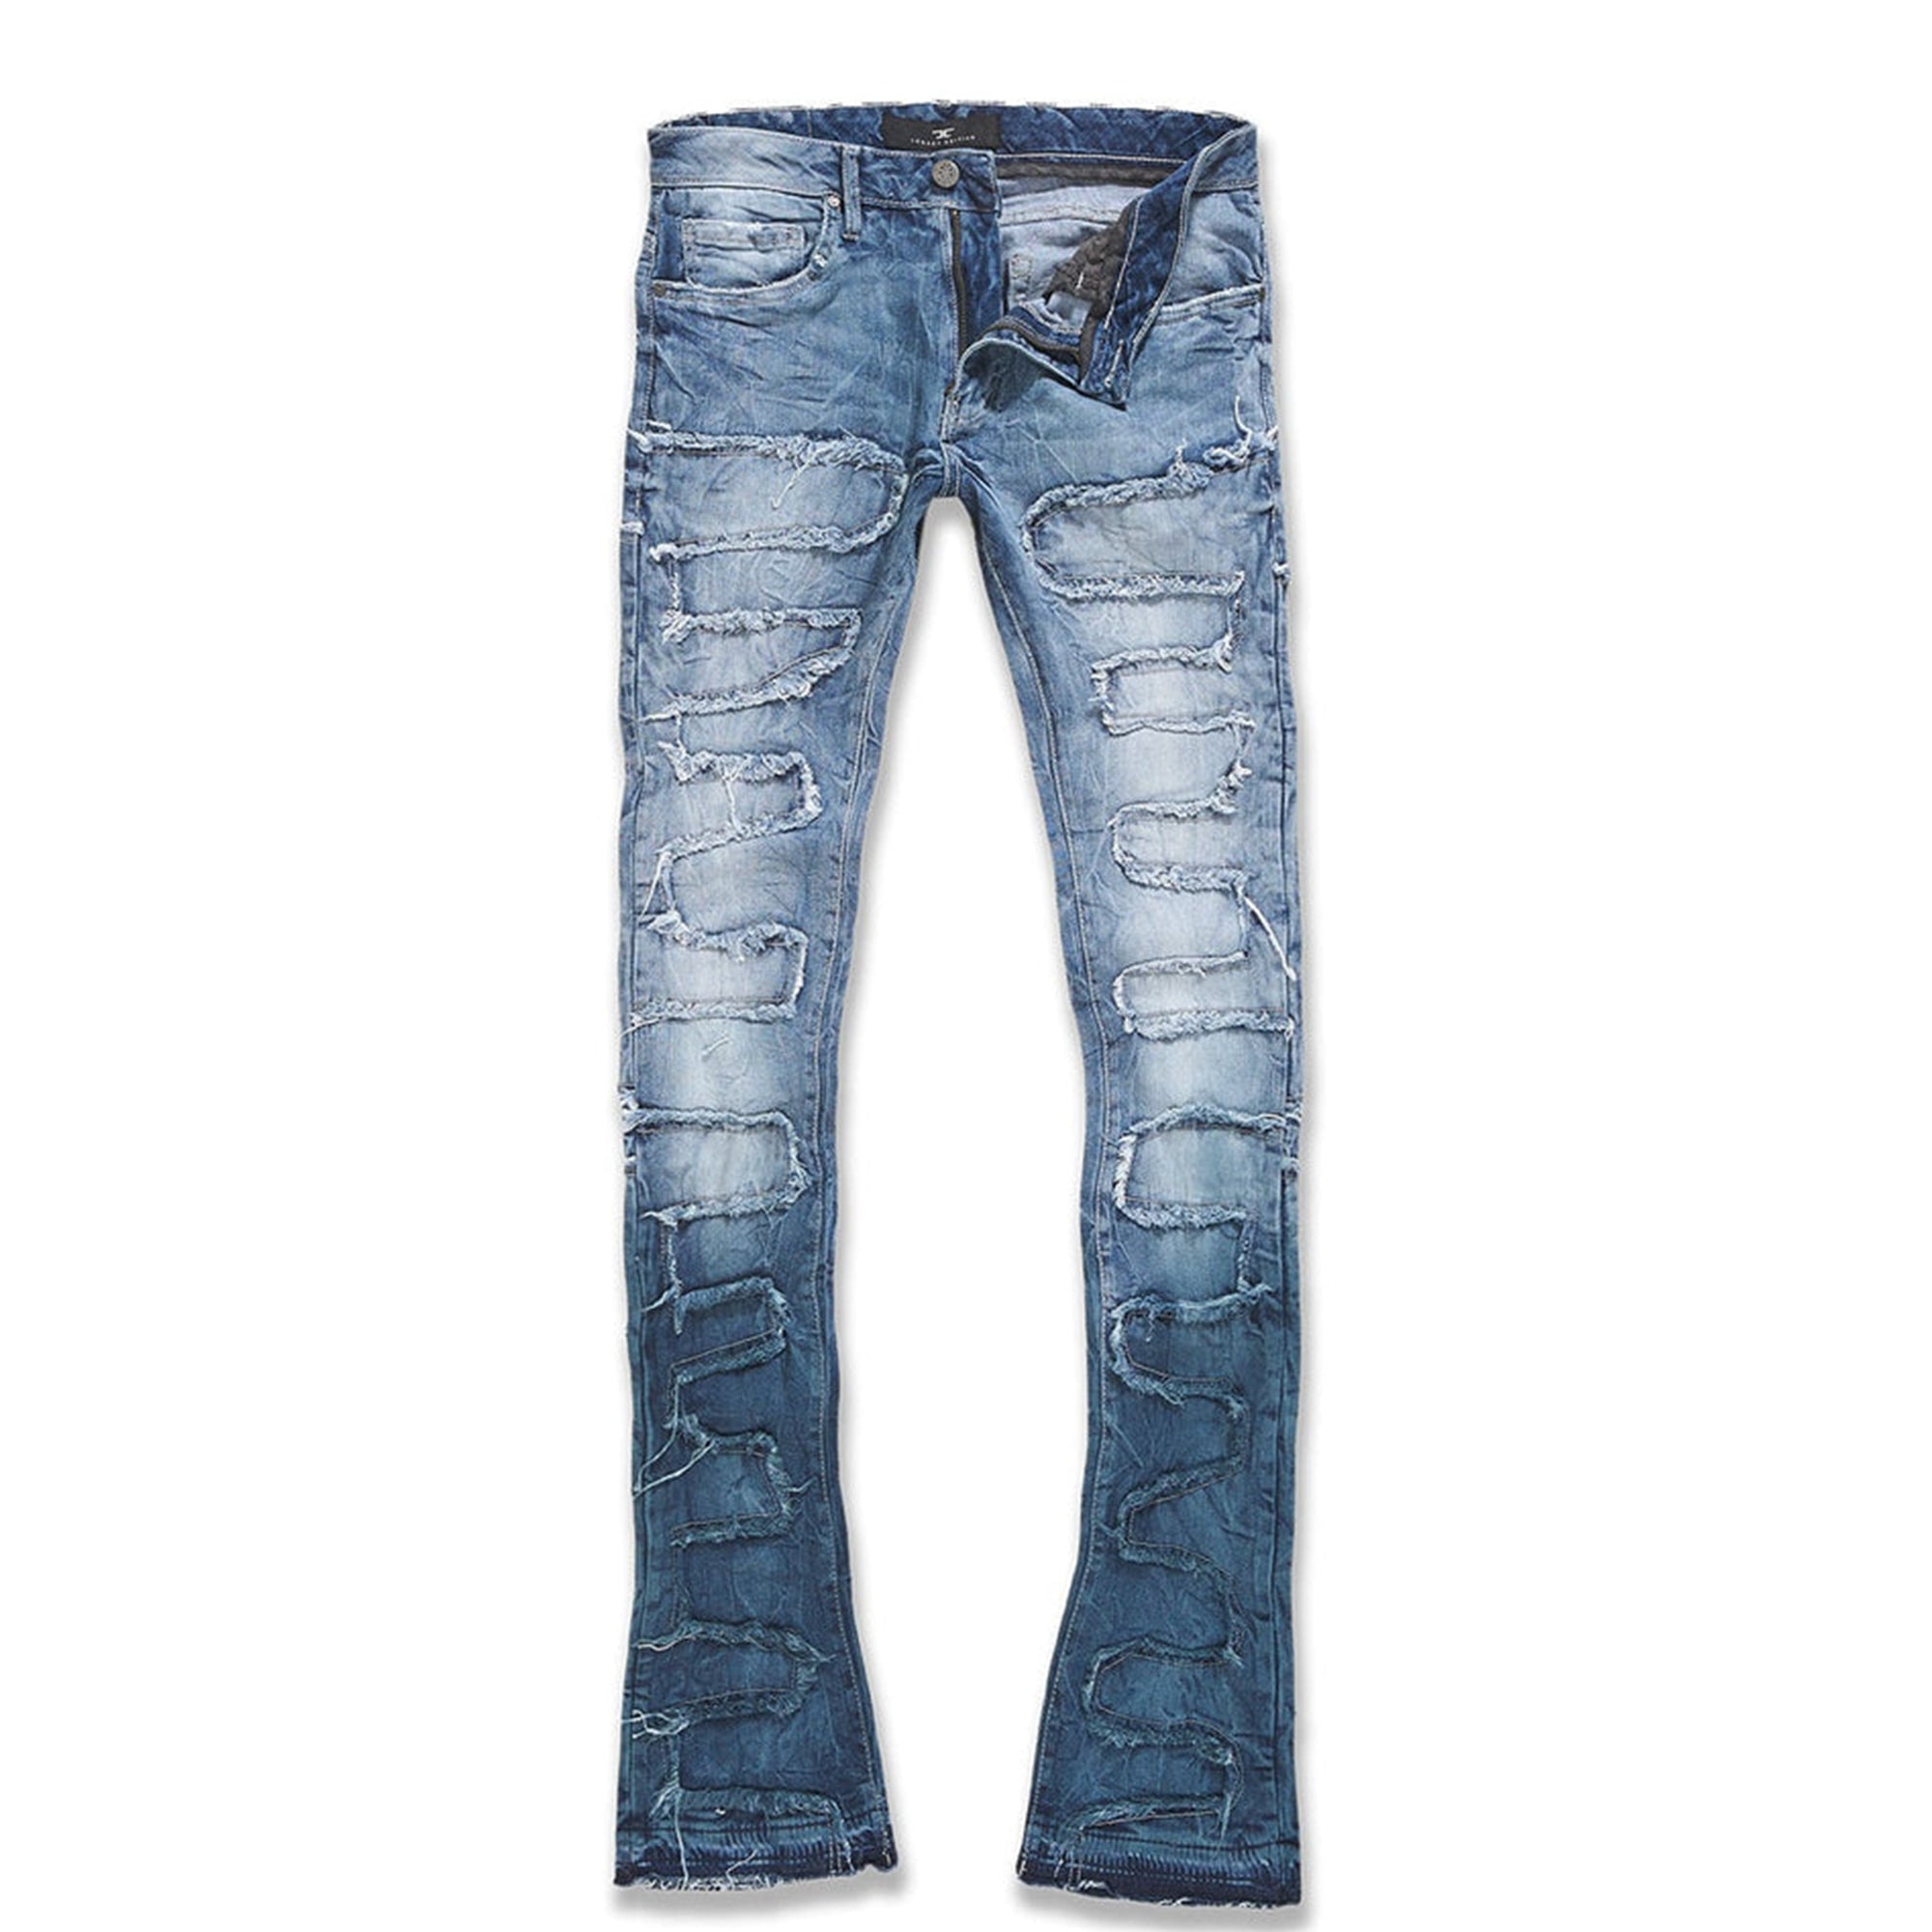 Jordan Craig Men Martin Stacked Python Jeans (Blue Wave)1

